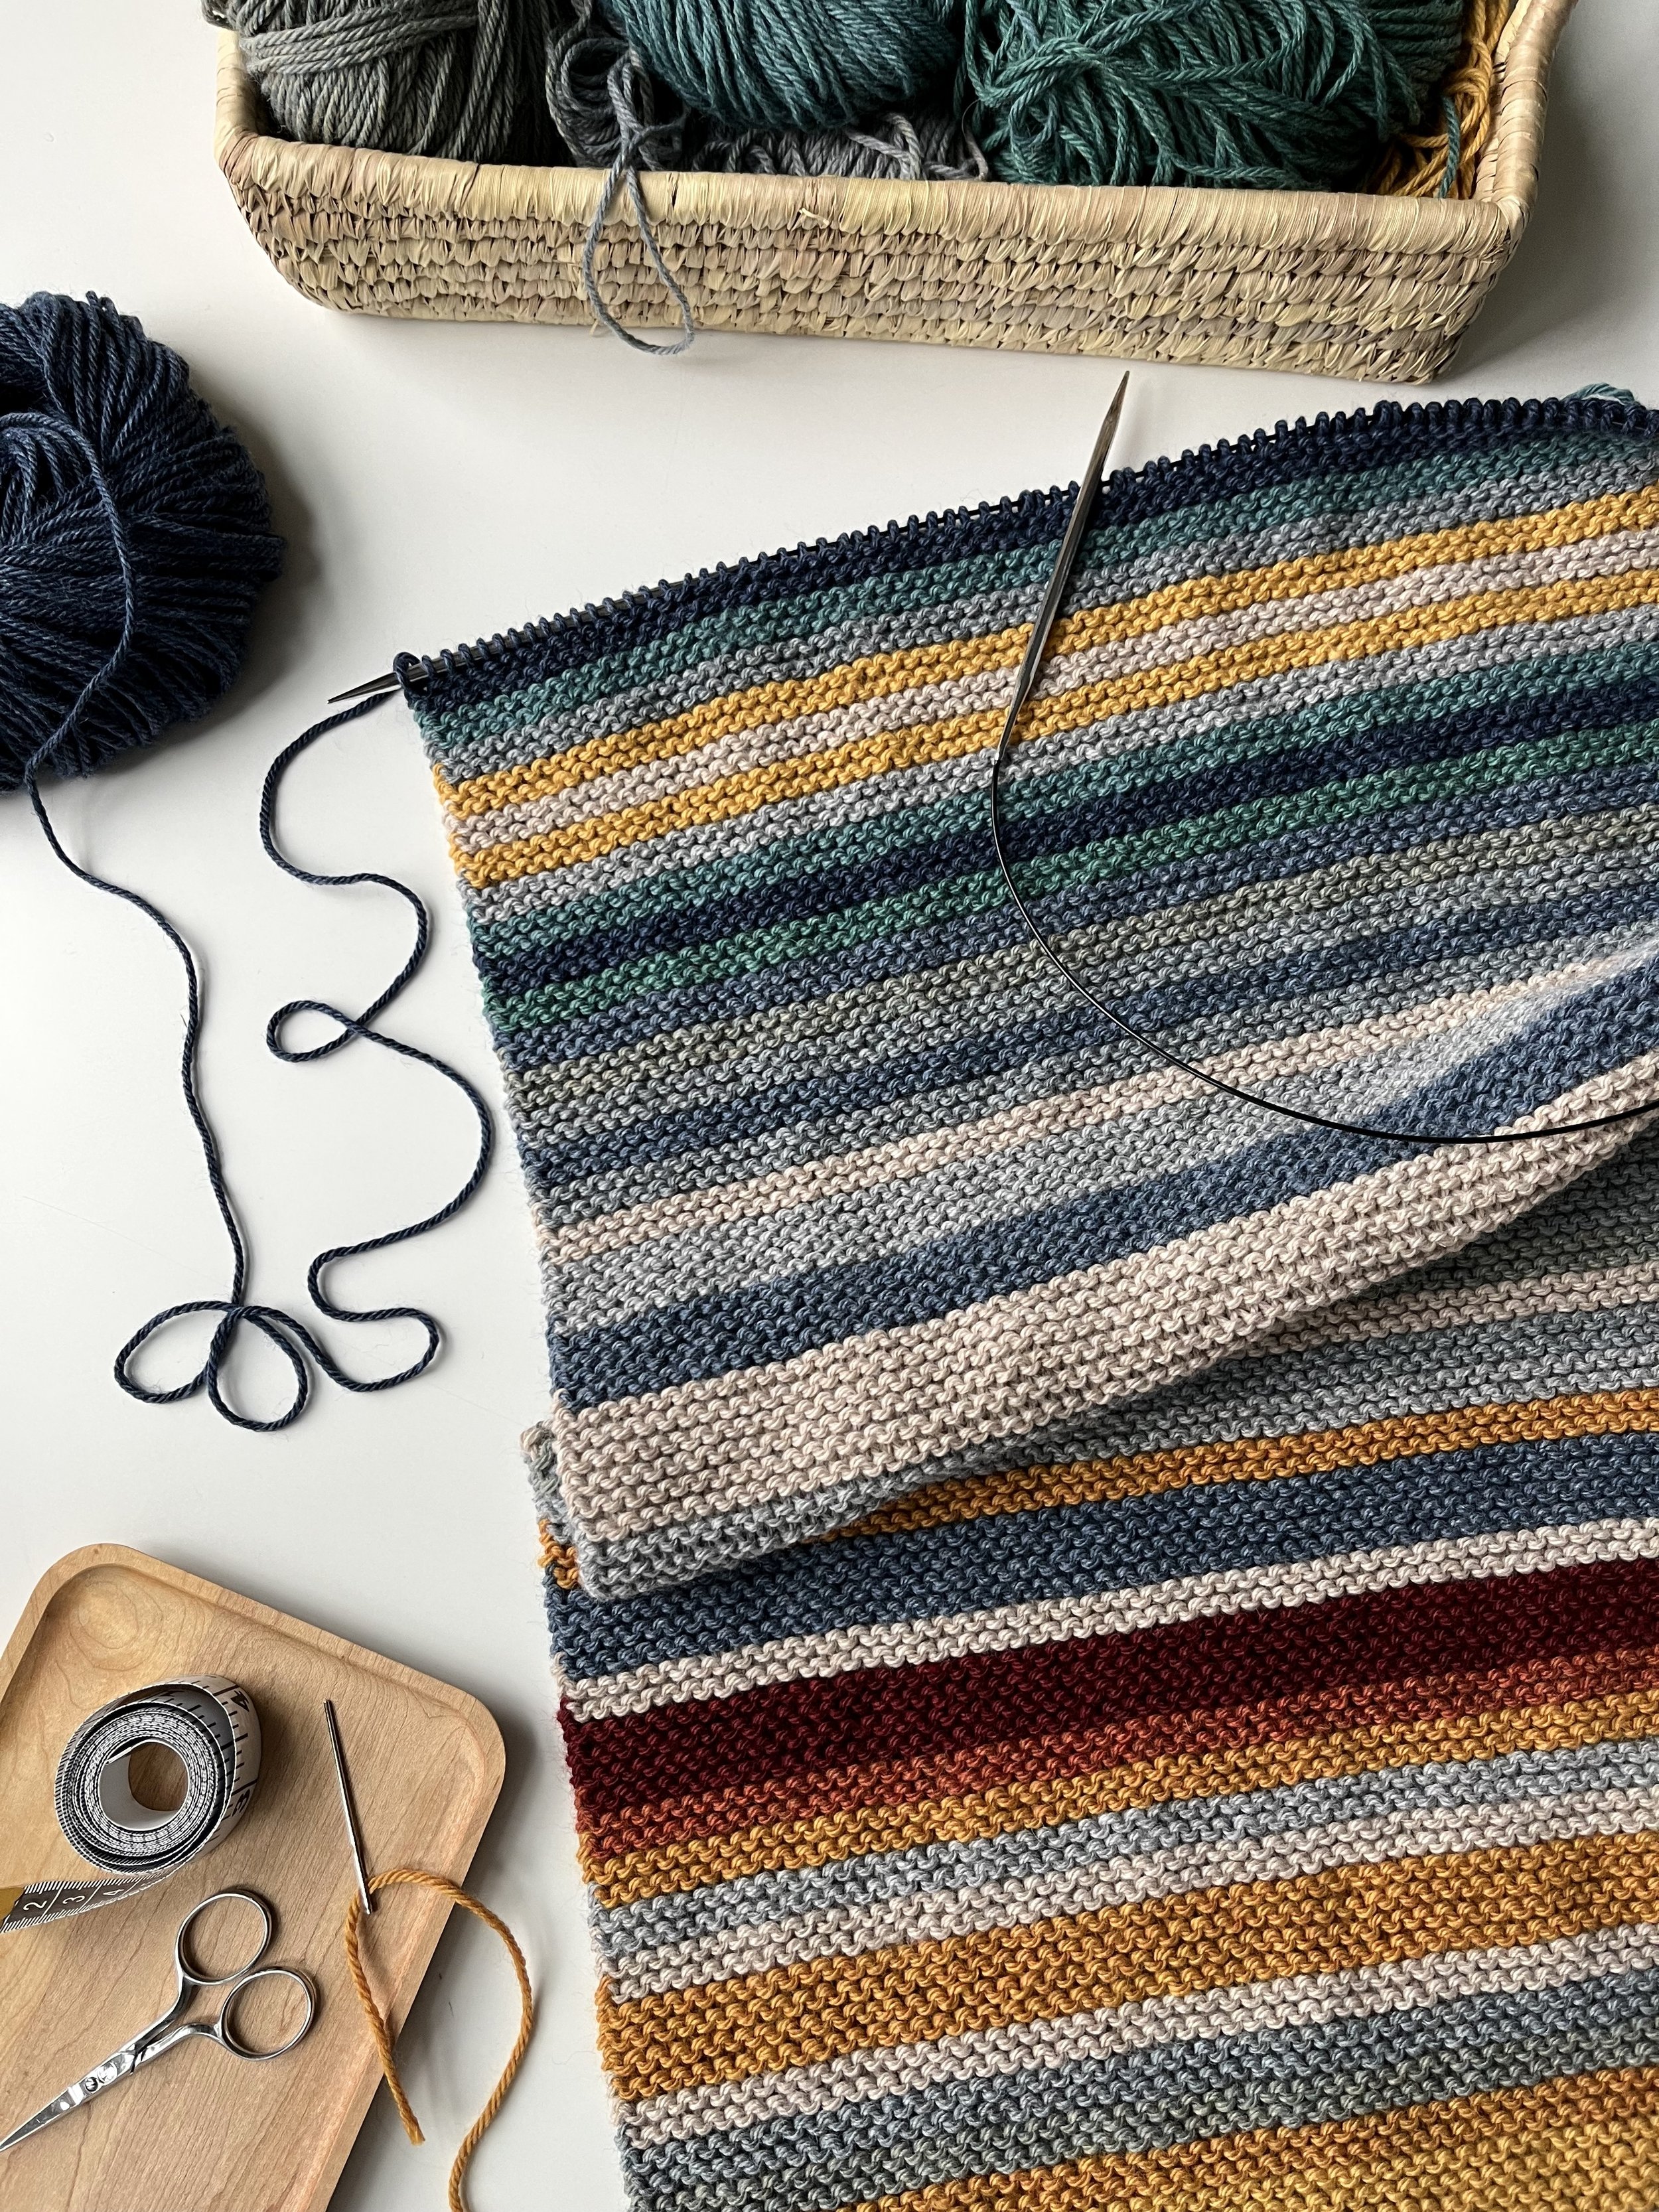 My Temperature Blanket Knitting Project 2022 Panel 3 Worsted Yarn Berroco Vintage Stripes Garter Stitch Fifty Four Ten Studio 3 11 2023.jpg